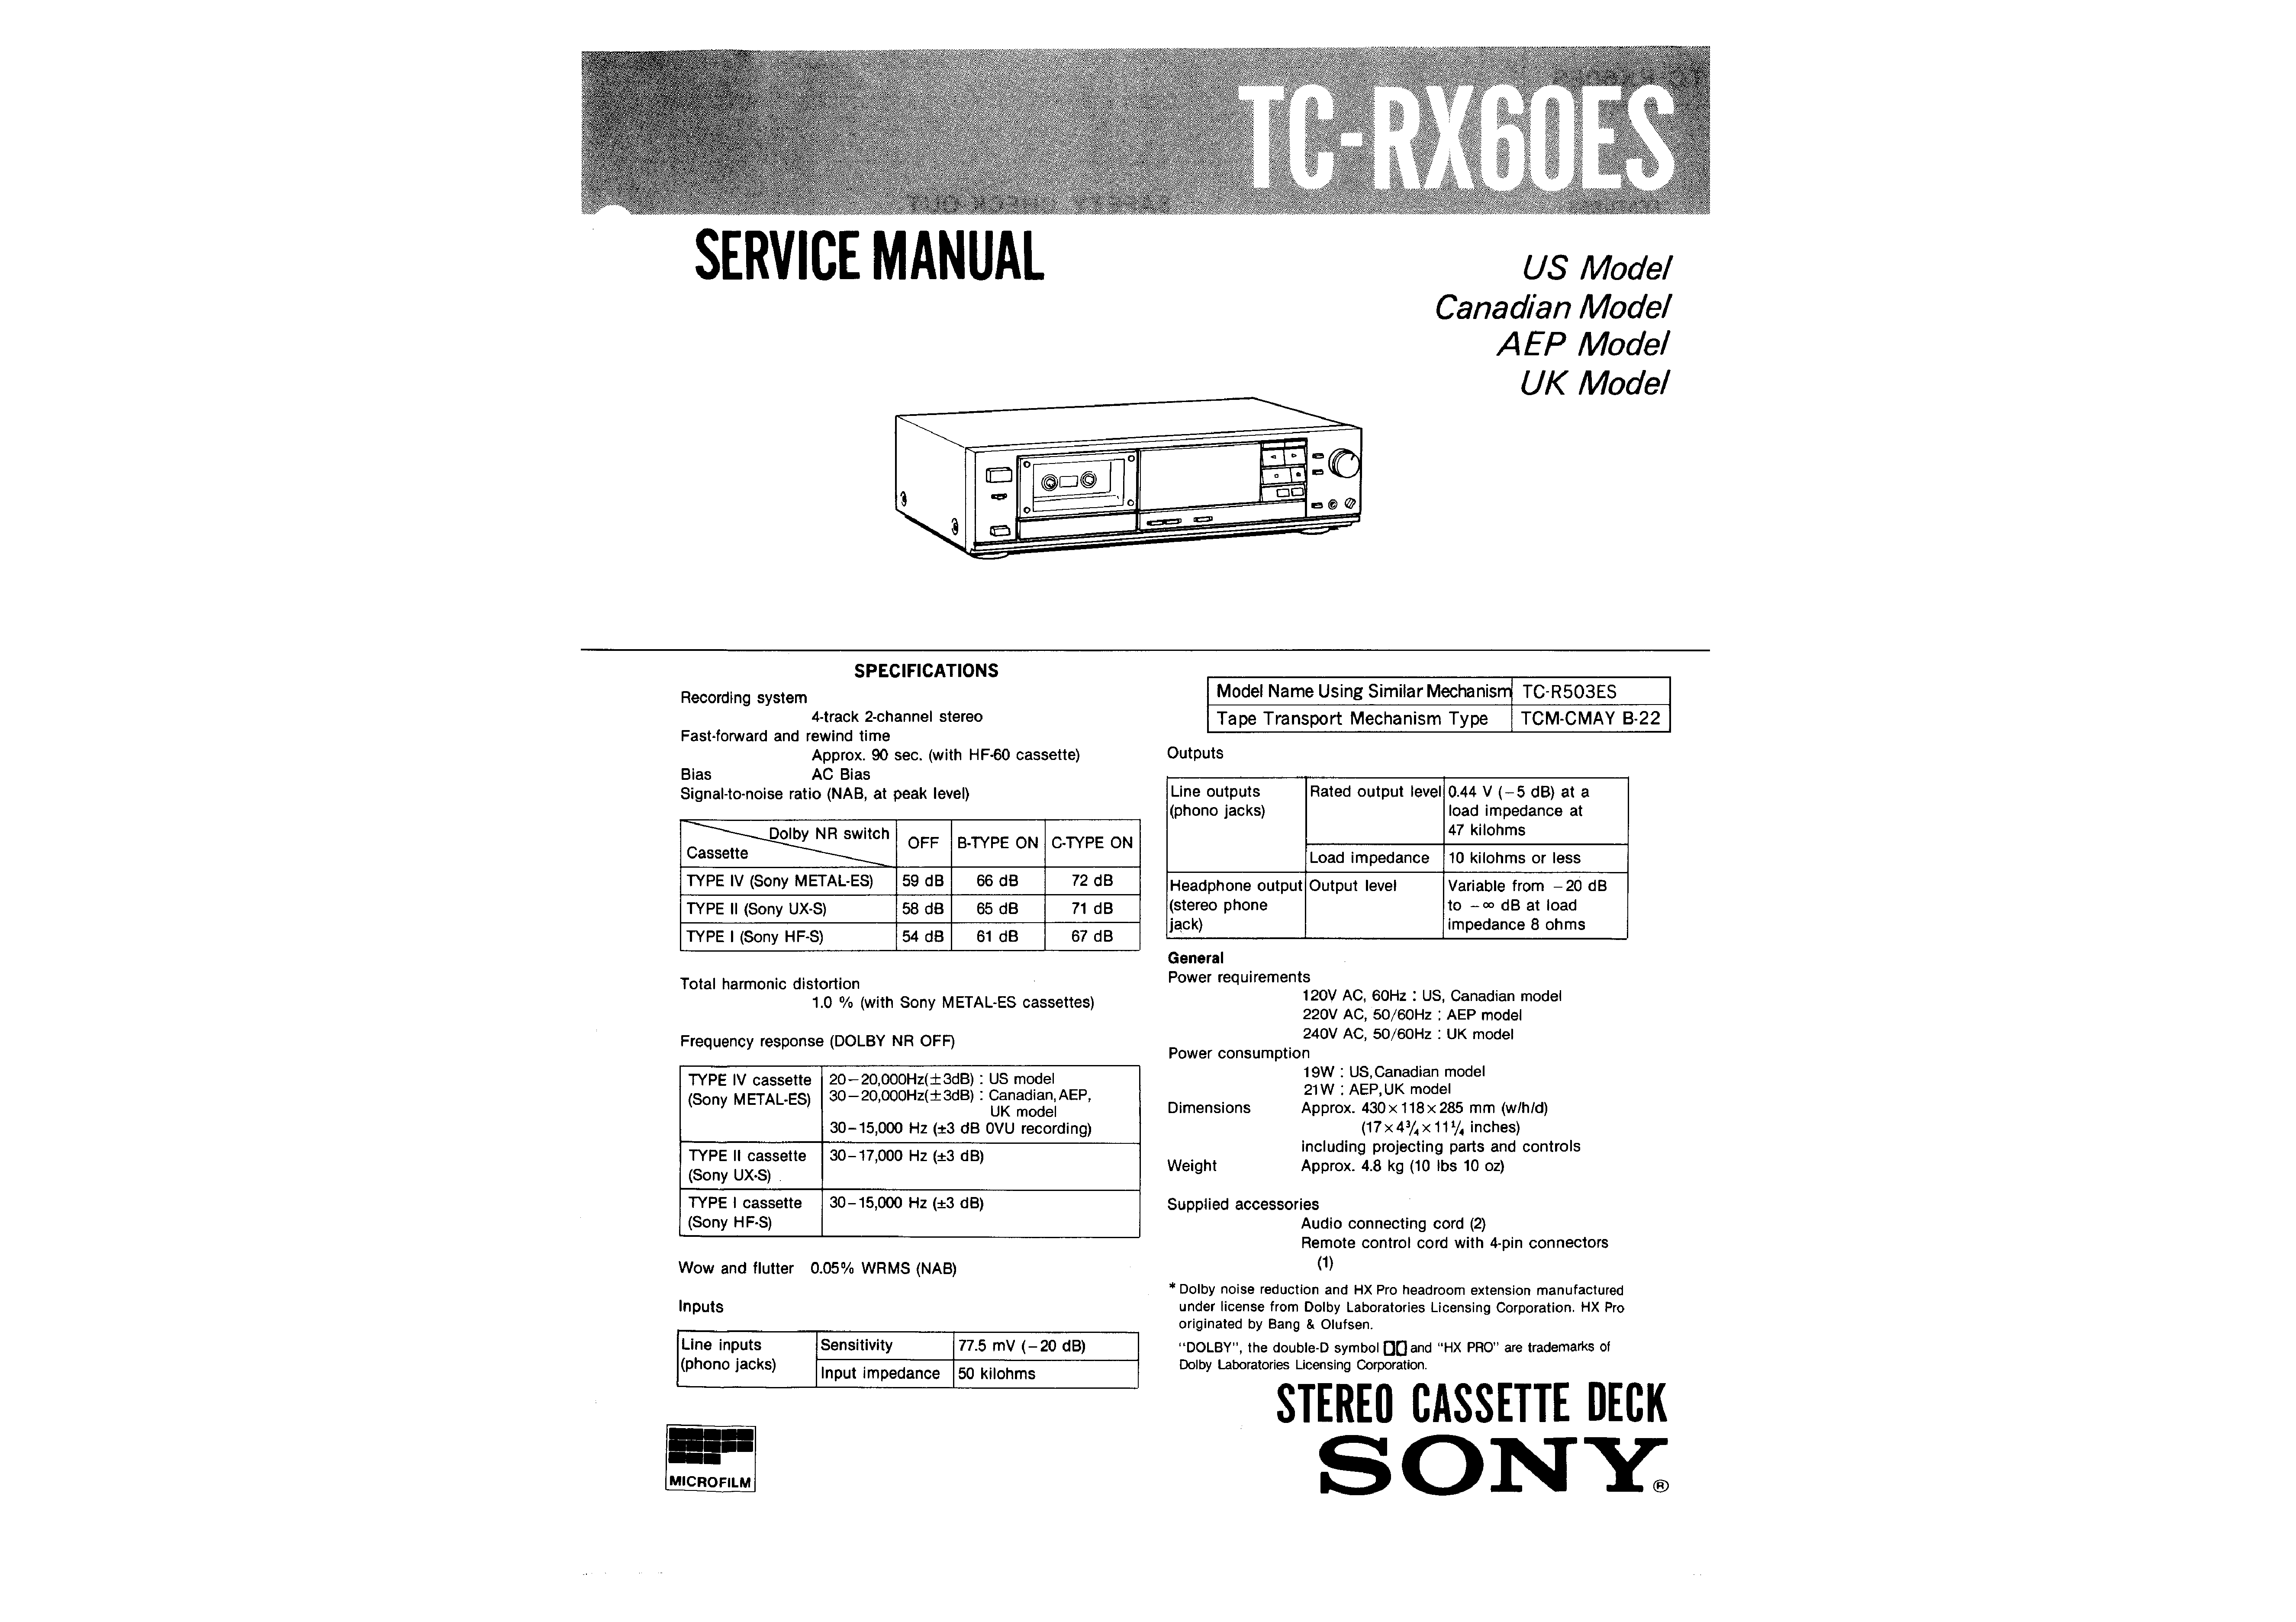 SONY TCRX60ES - Service Manual 